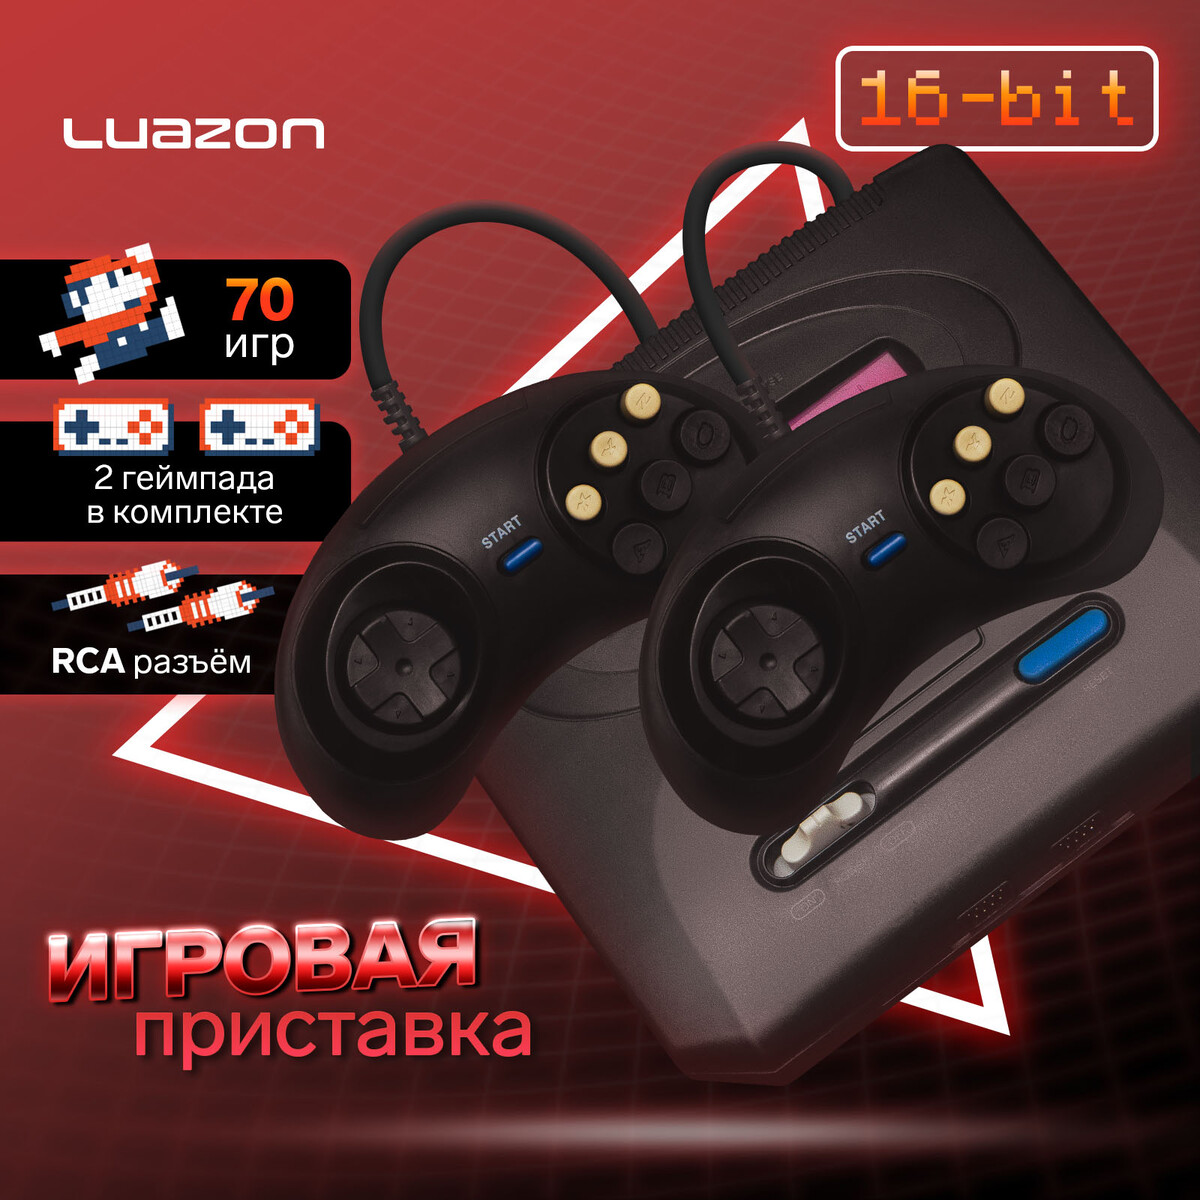 Игровая приставка luazon game-2, 16 бит, в комплекте два джойстика, 70 игр, черная батут hasttings air game 15ft